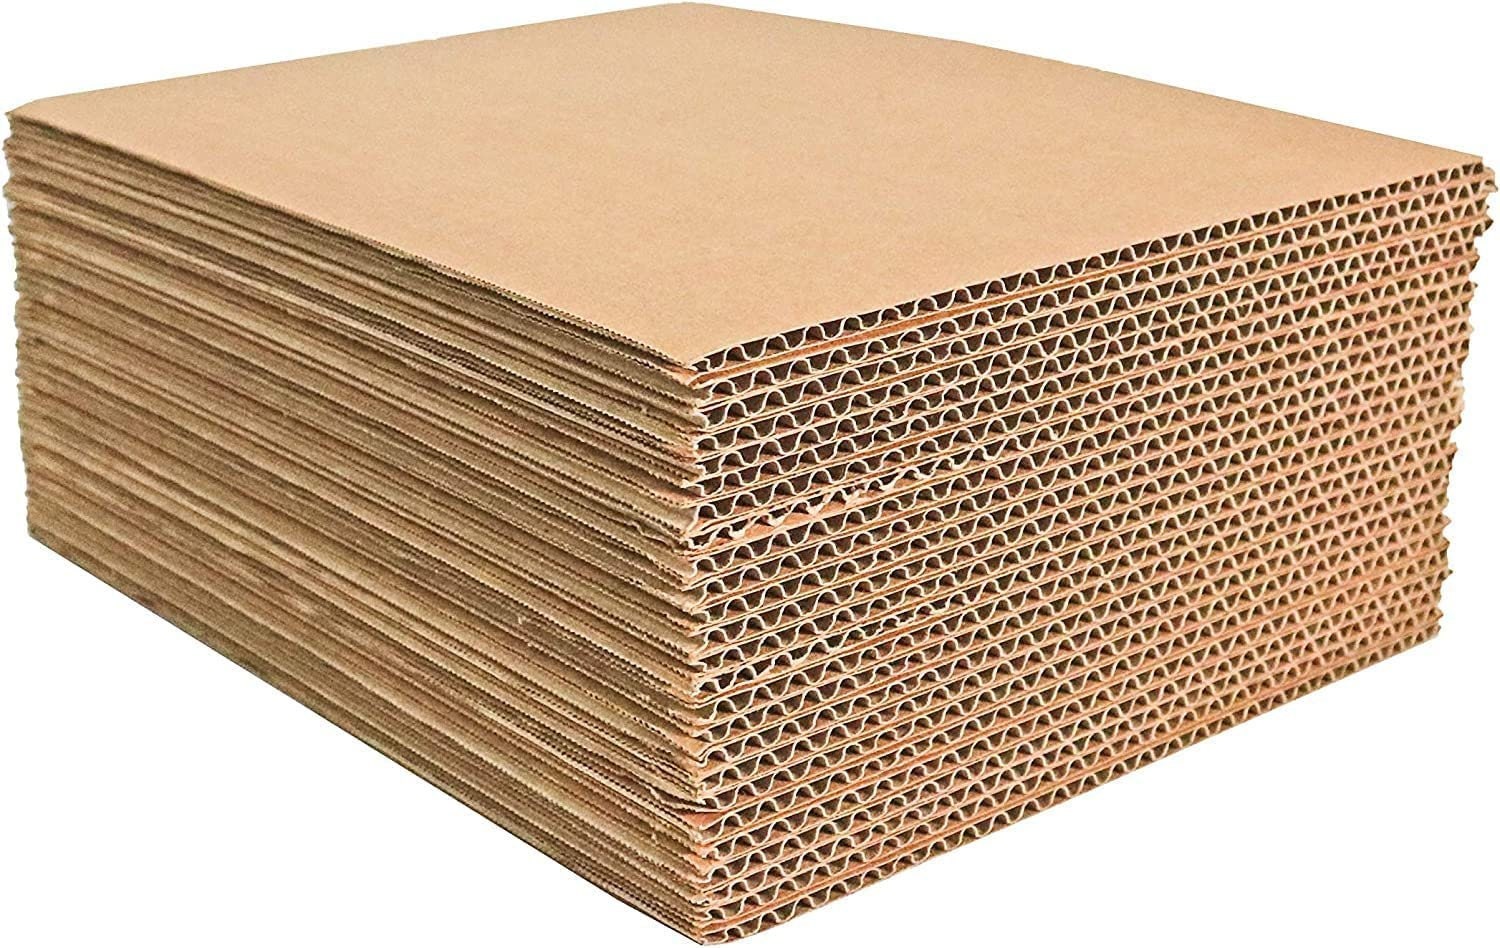 JAPCHET 100 Pack 9 x 6 inch Brown Corrugated Cardboard Sheets, Flat Corrugated Cardboard Filler Insert Sheet Pads Squares Bulk, for Packing, Mailing